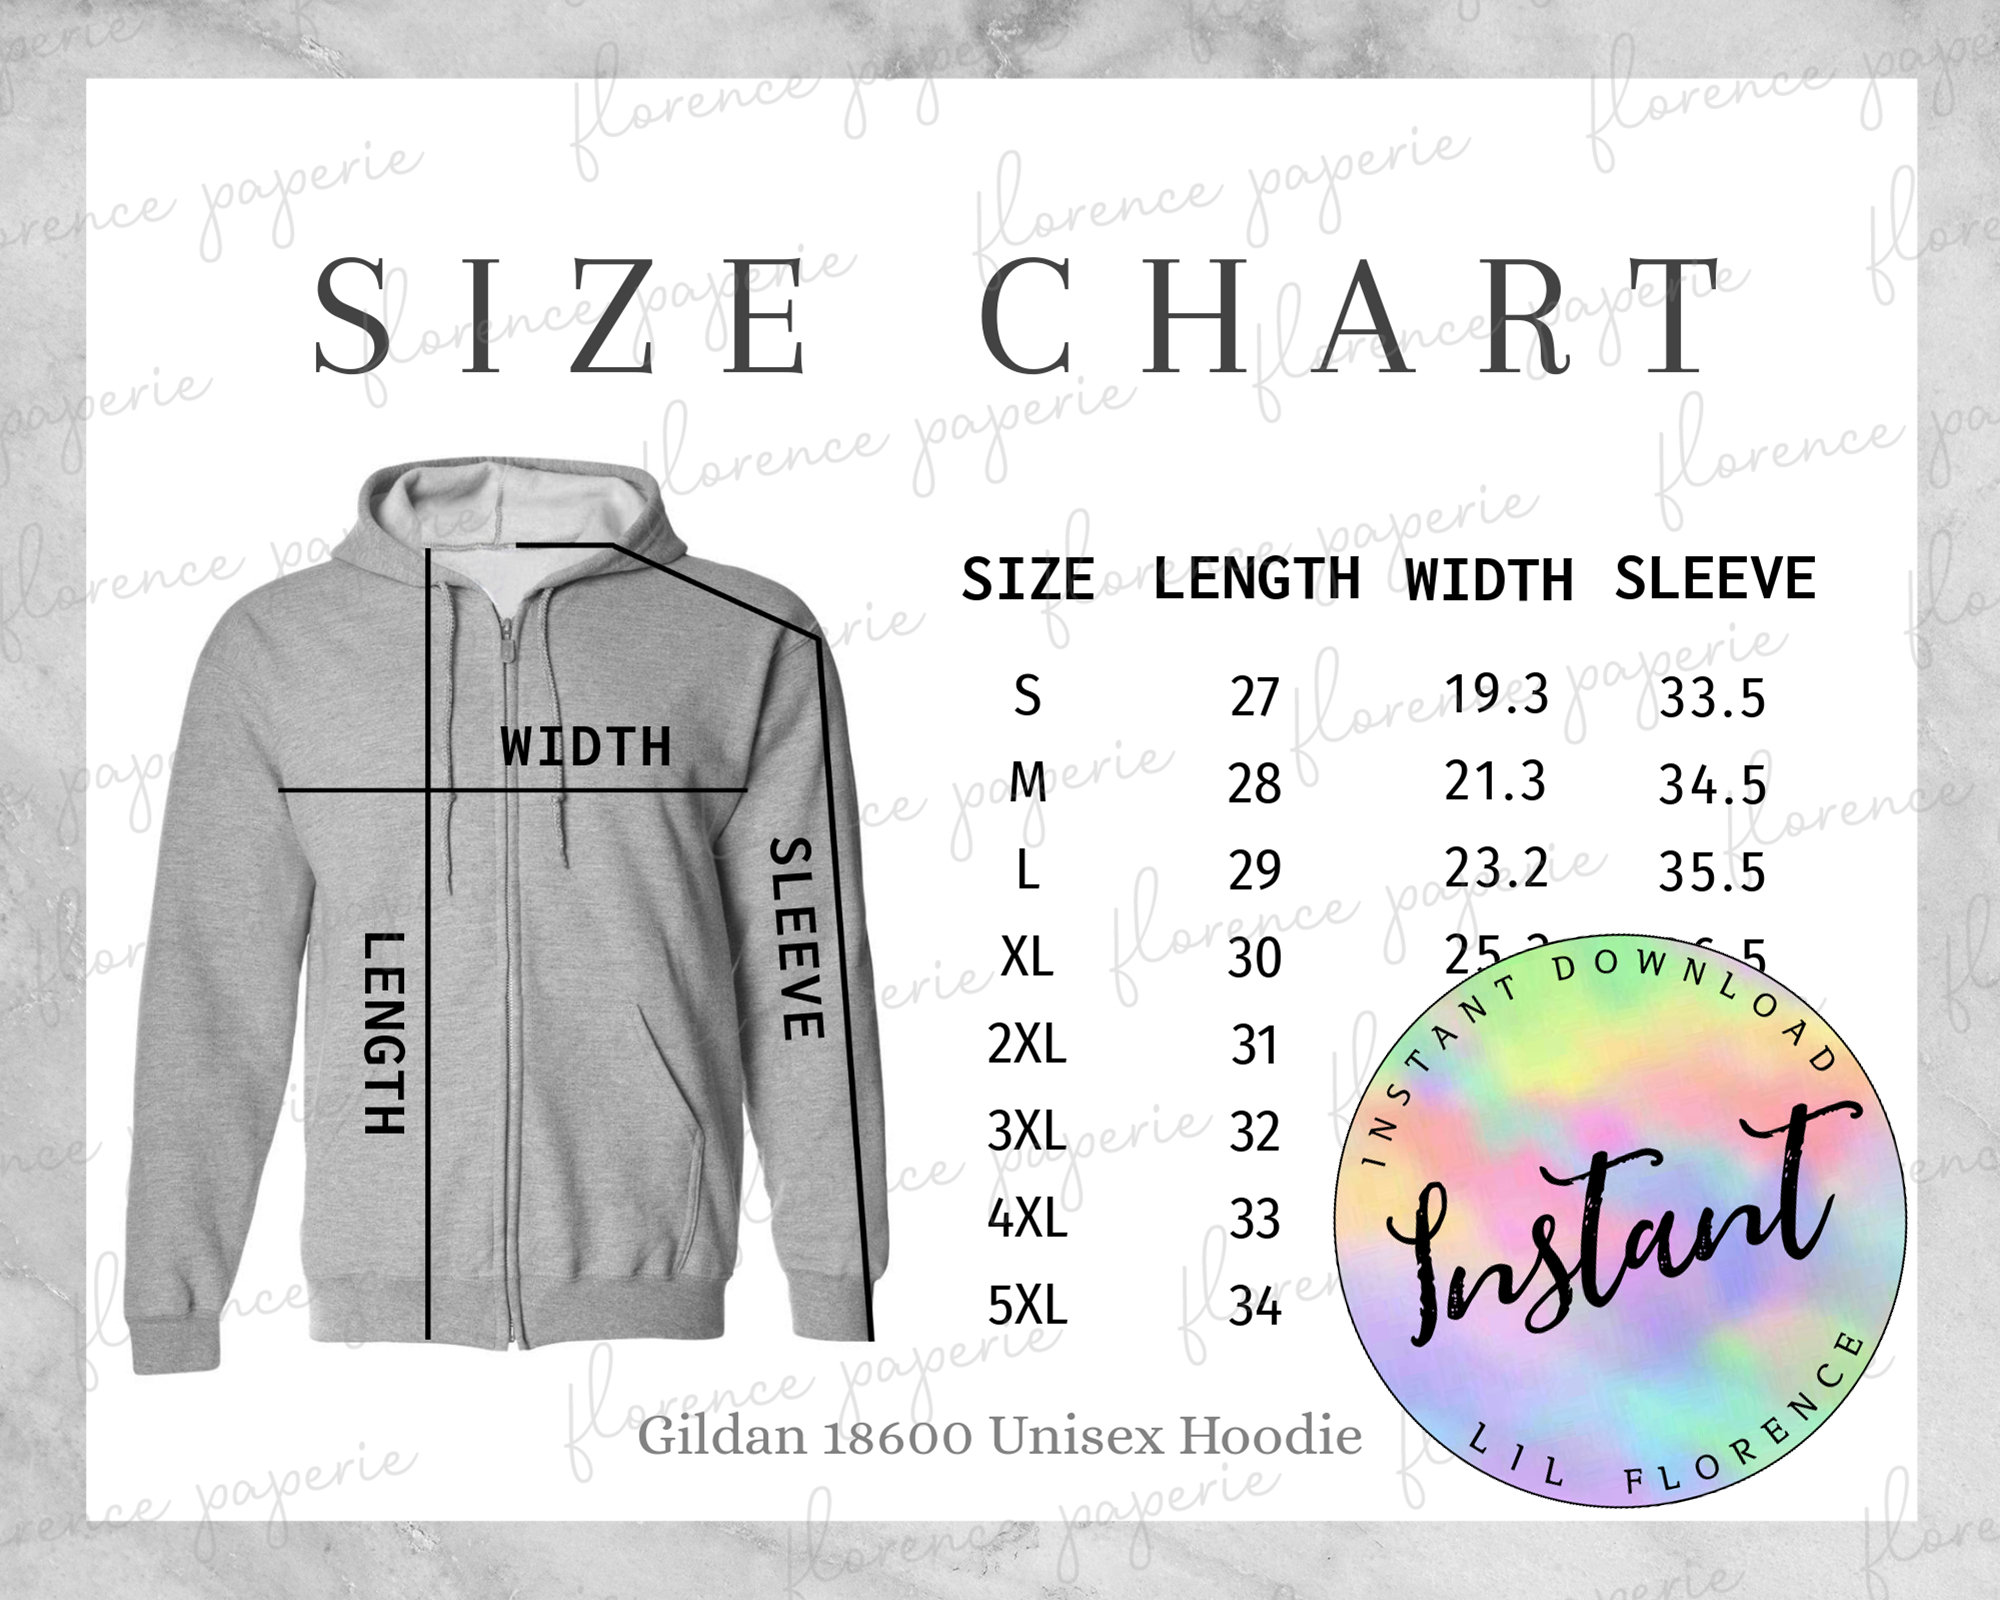 Gildan 18600 Hoodie Size Chart, Unisex Full Zip Hooded Sweatshirt,  Téléchargeable, Imprimable, Tableau des tailles pour hommes, Tableau des  tailles pour femmes -  France